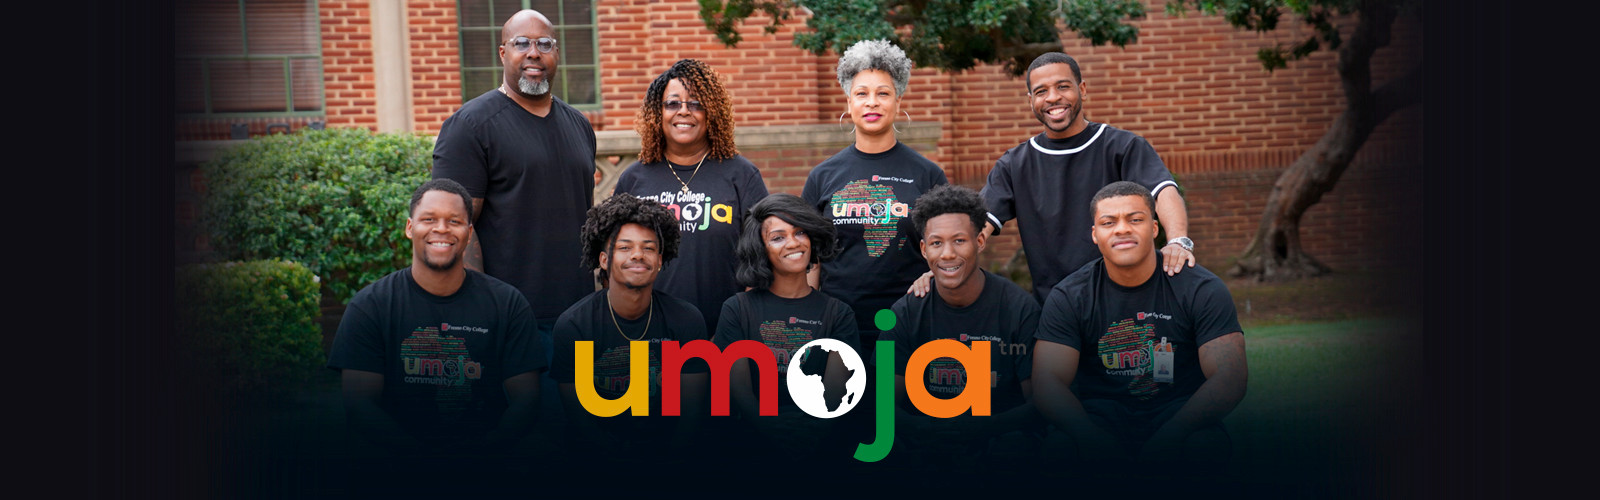 Group photo of Umoja team